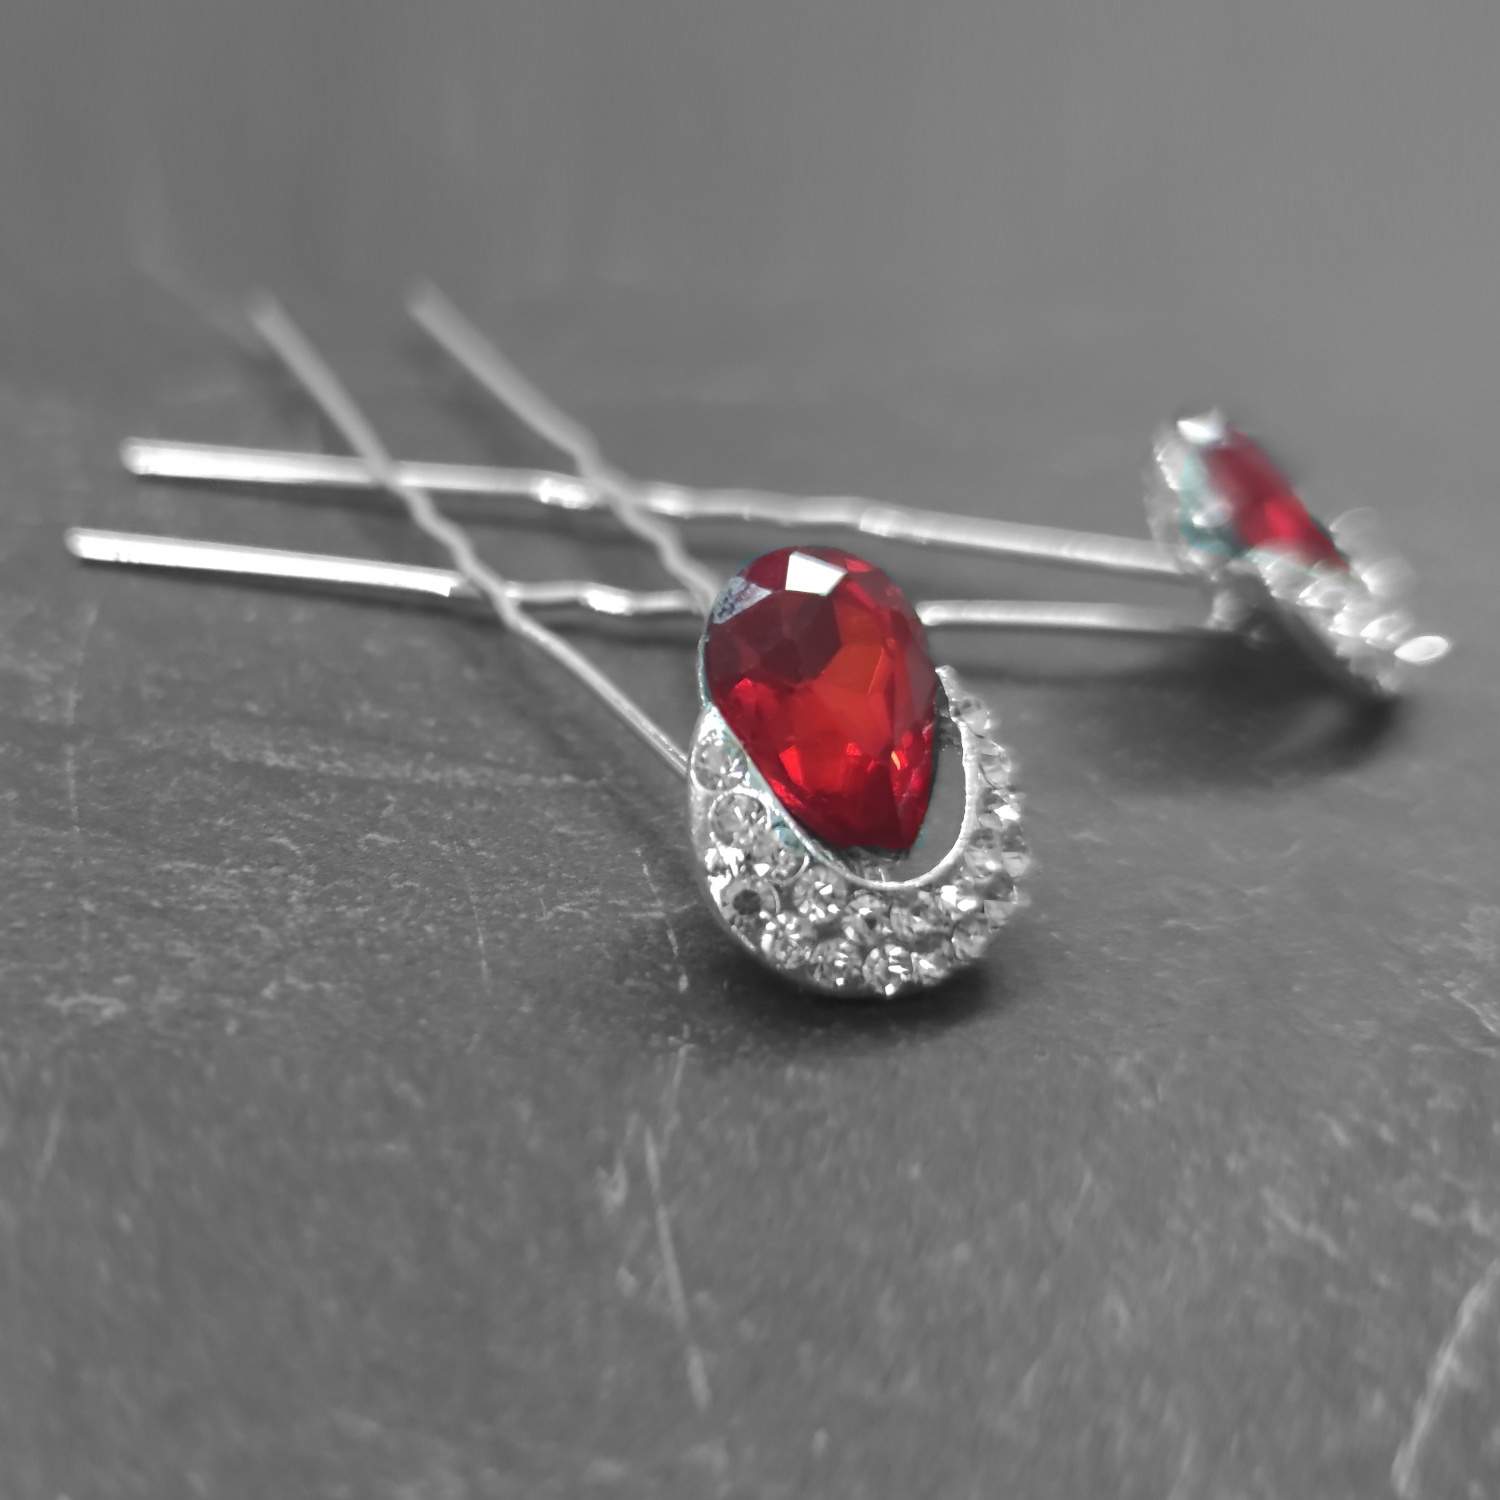 Mam Onhandig vermomming Zilverkleurige Hairpins – Rode Kristal - Diamantjes - 2 stuks - CJchoice.nl